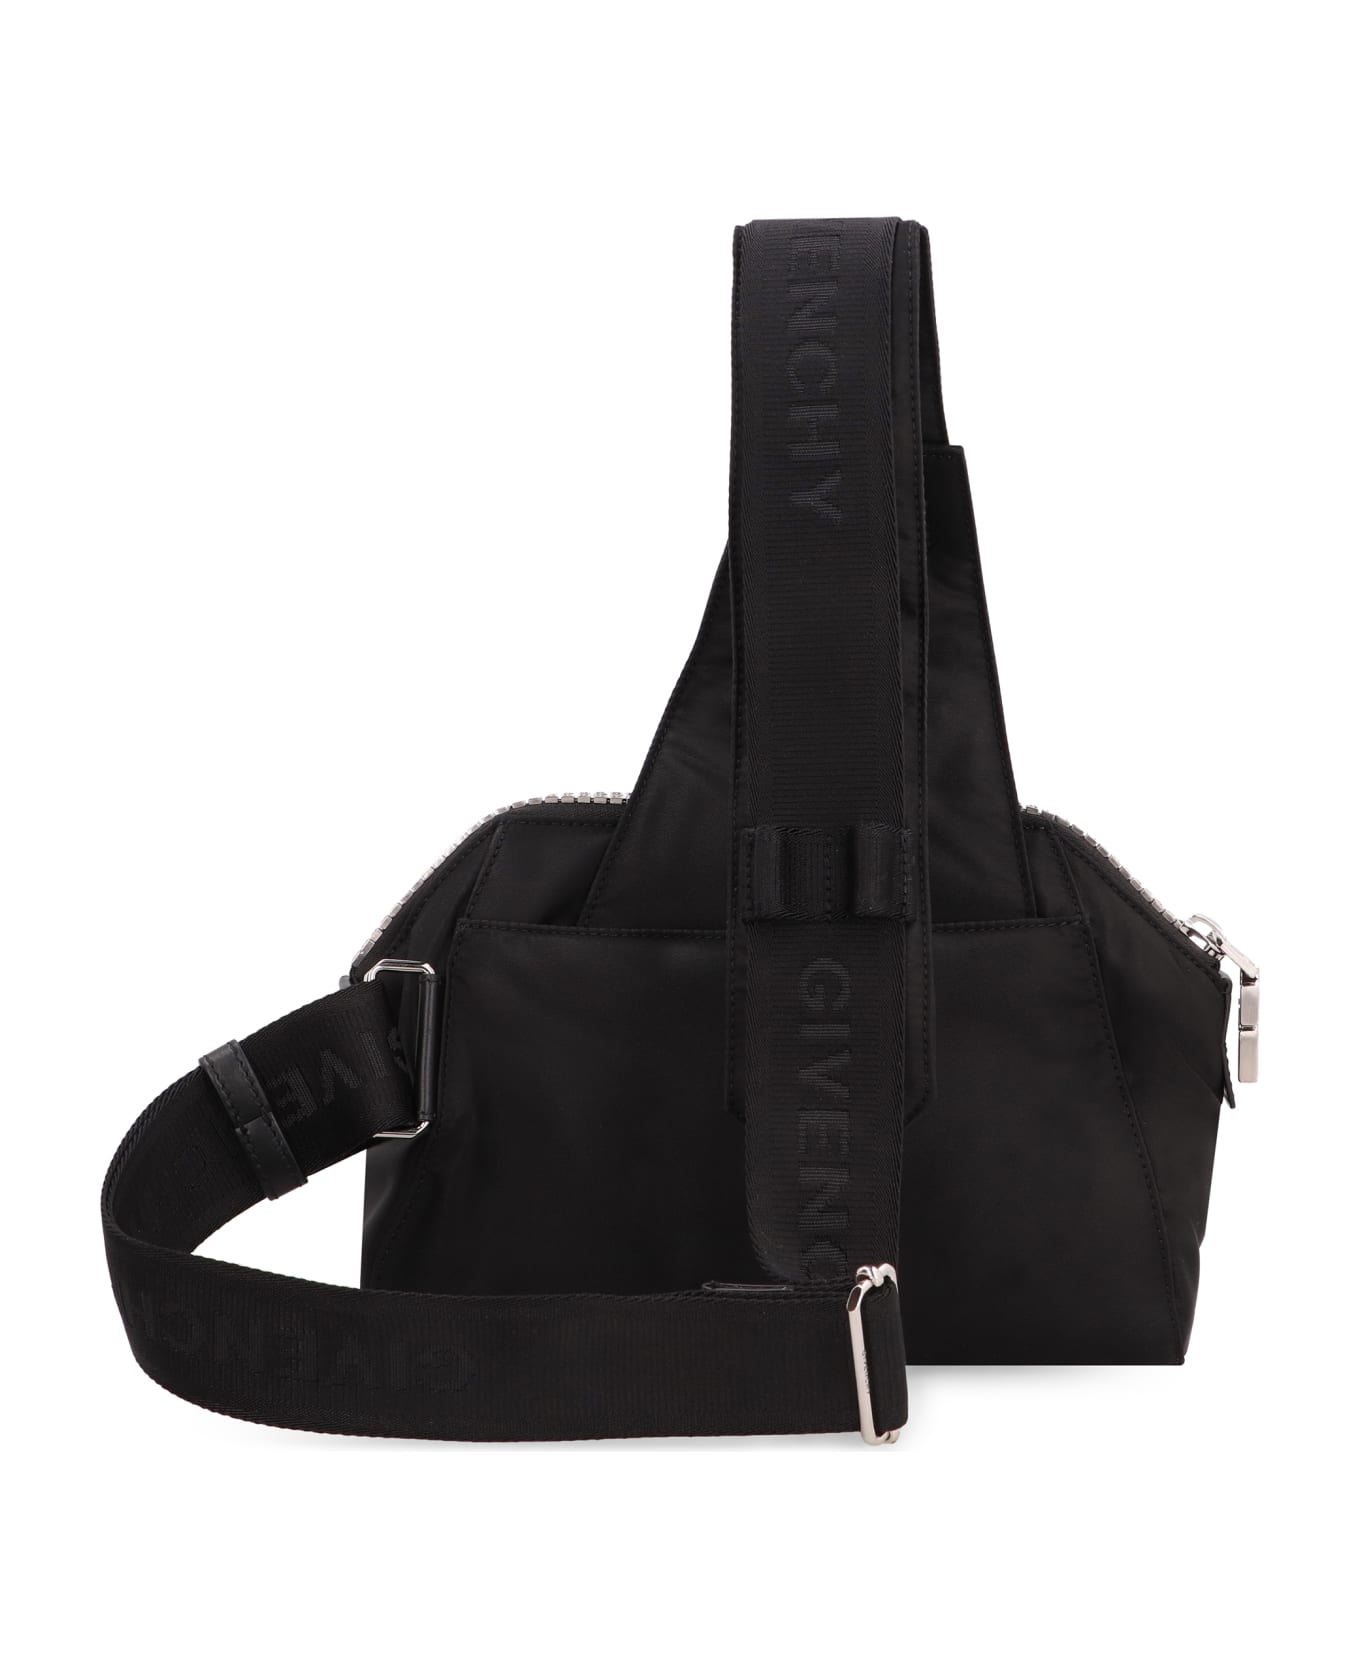 Givenchy Antigona Nylon And Leather Bag - Black